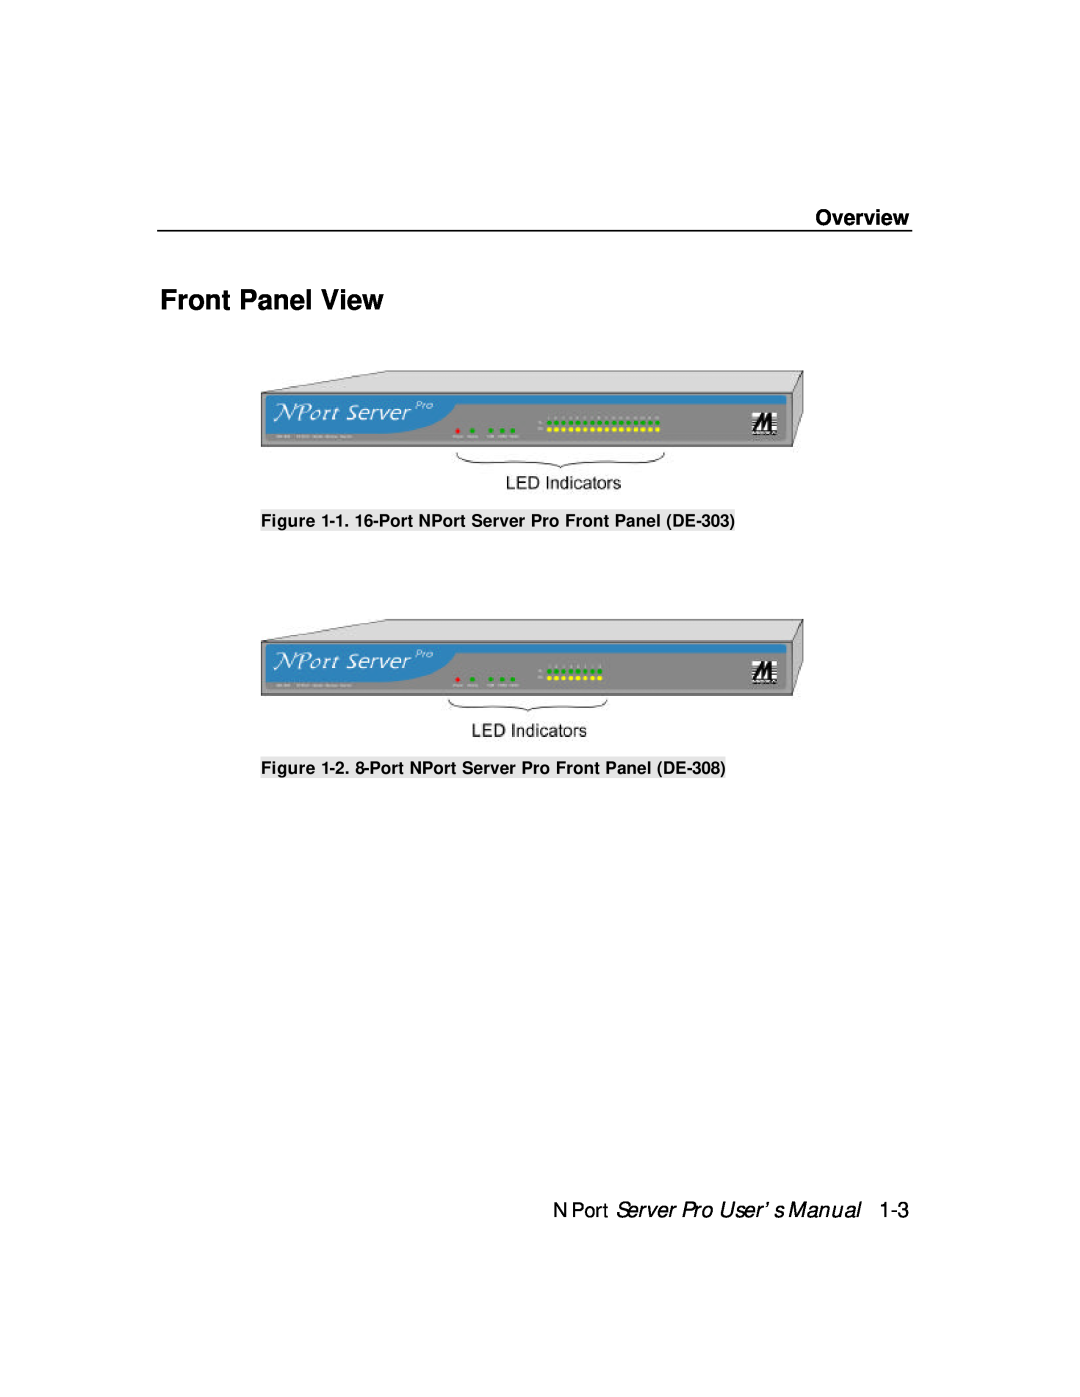 Moxa Technologies DE-308, DE-303 manual Front Panel View, Overview, NPort Server Pro User’s Manual 